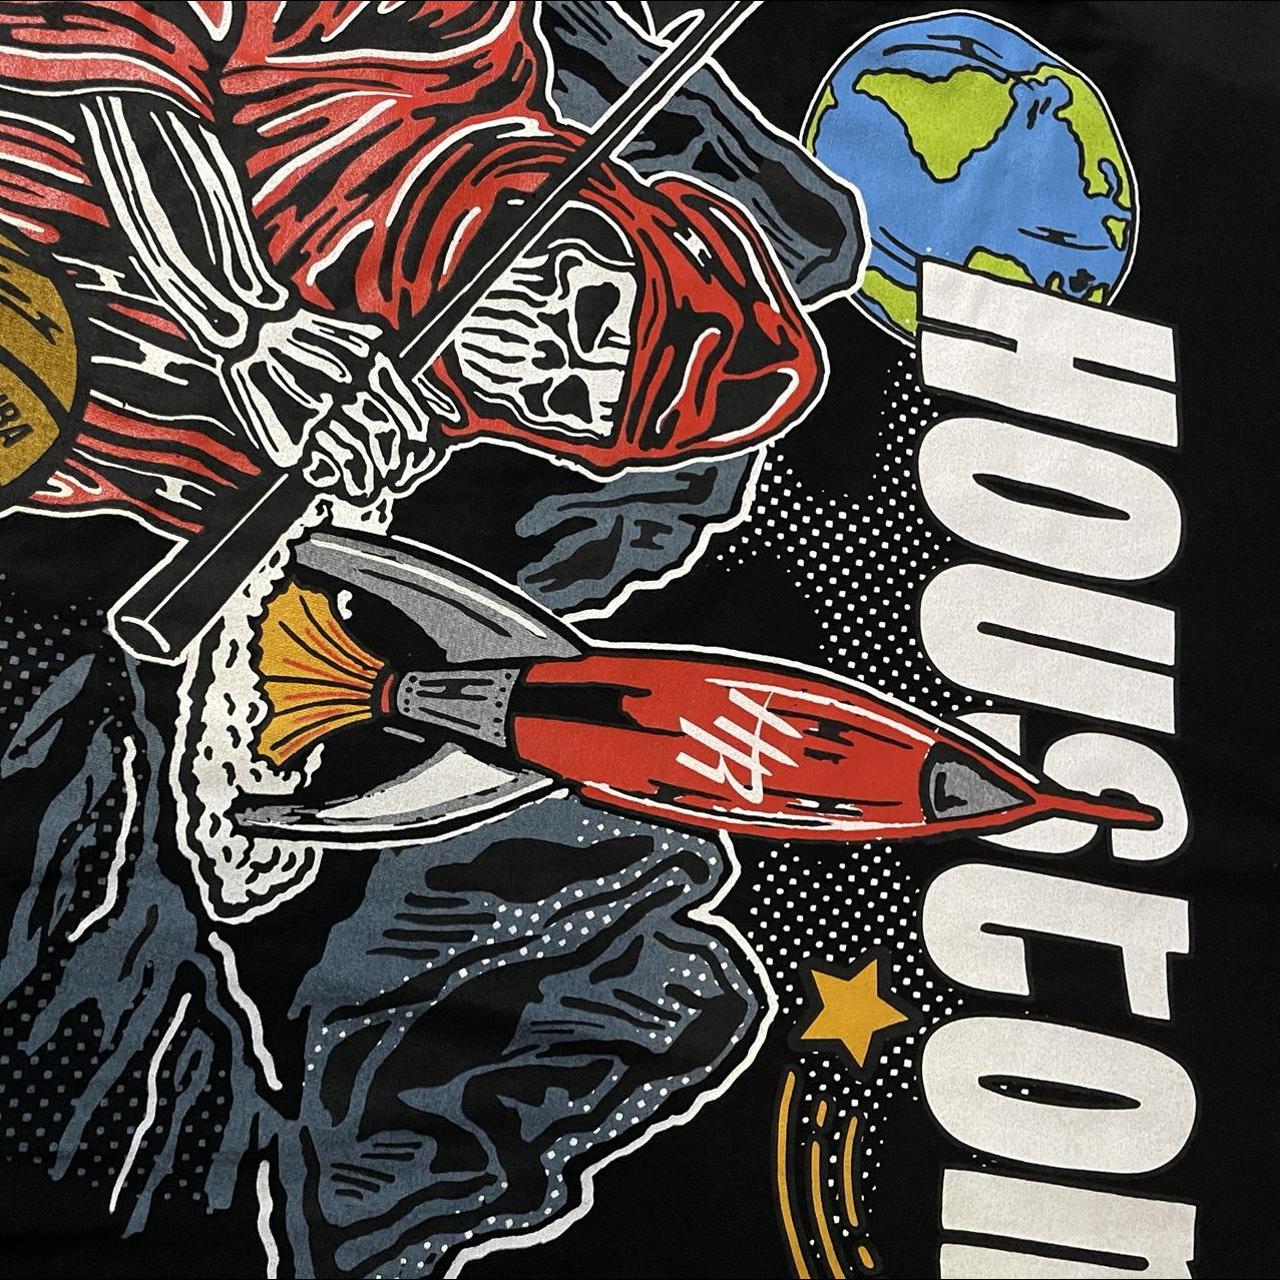 🏀 Warren Lotas Houston Rockets T-Shirt Size Medium – The Throwback Store 🏀